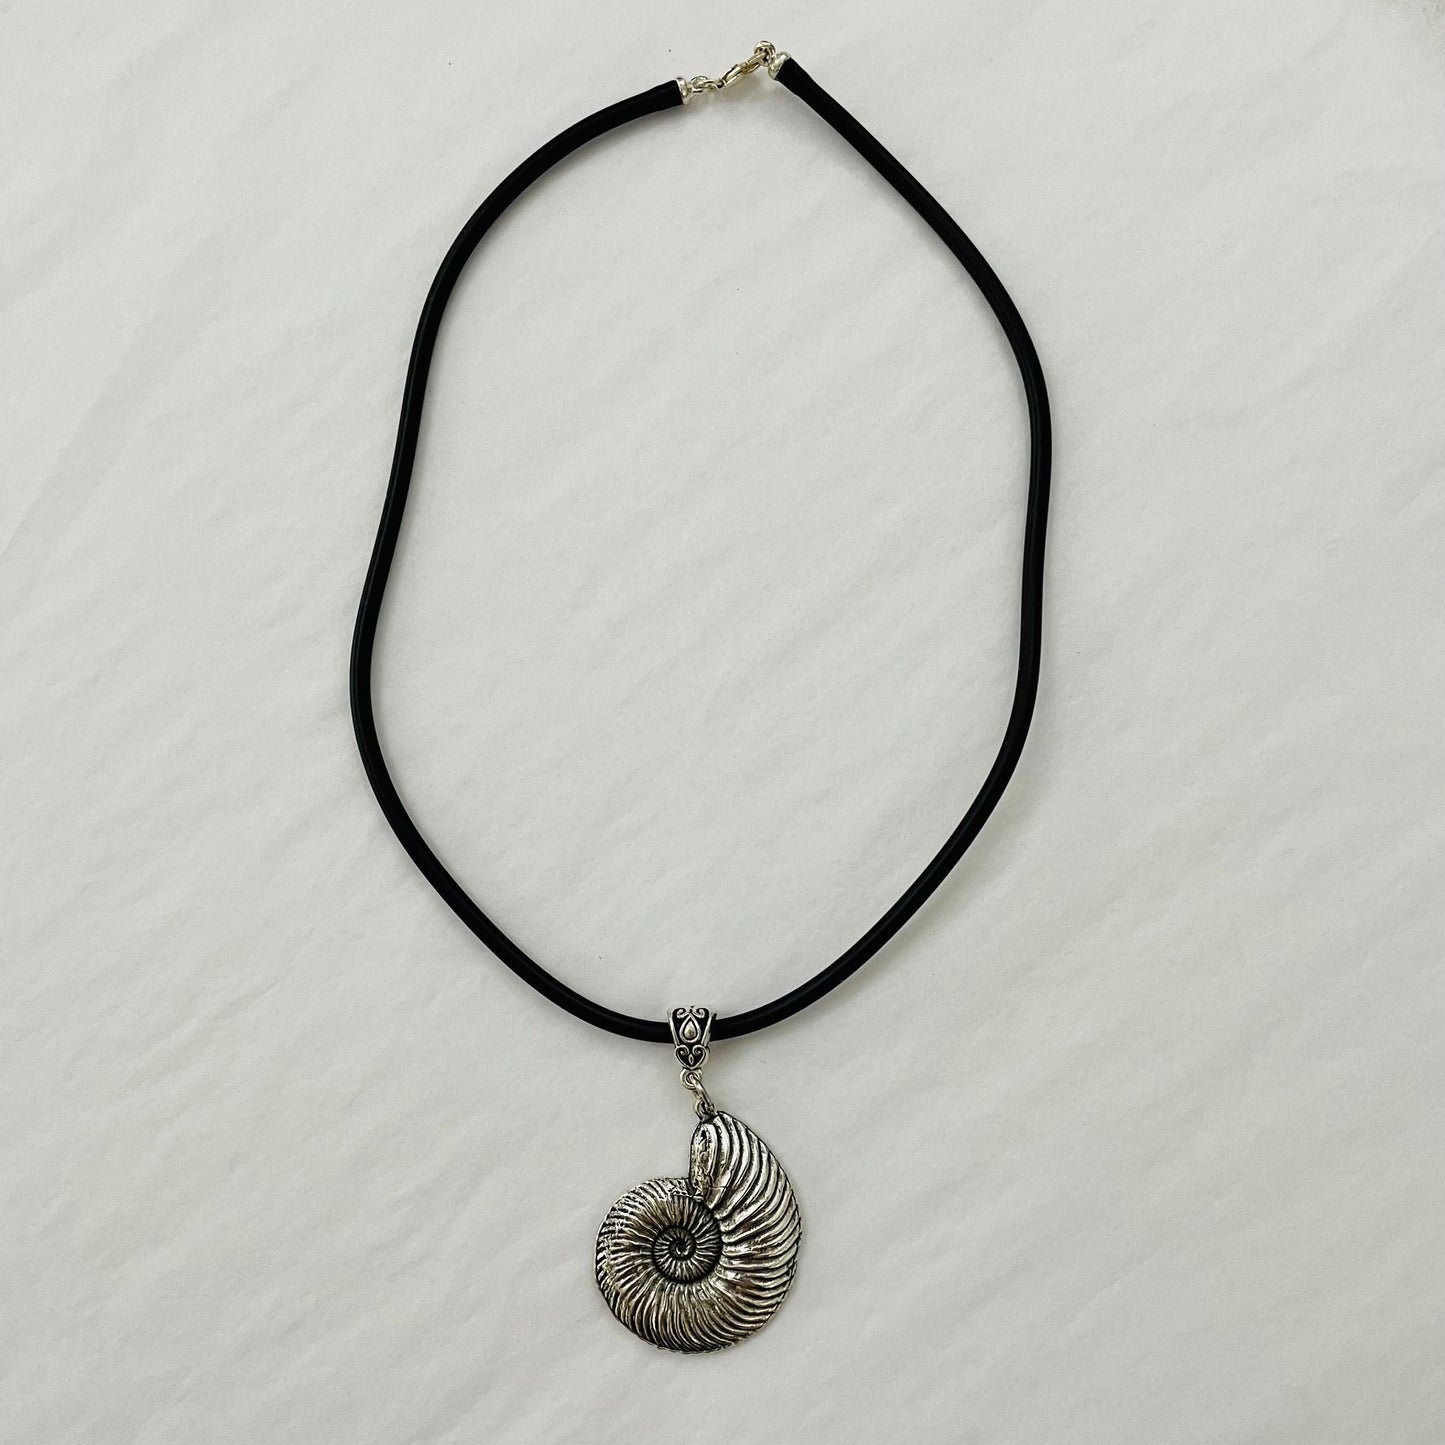 Calypso Flash Necklace - Seashell